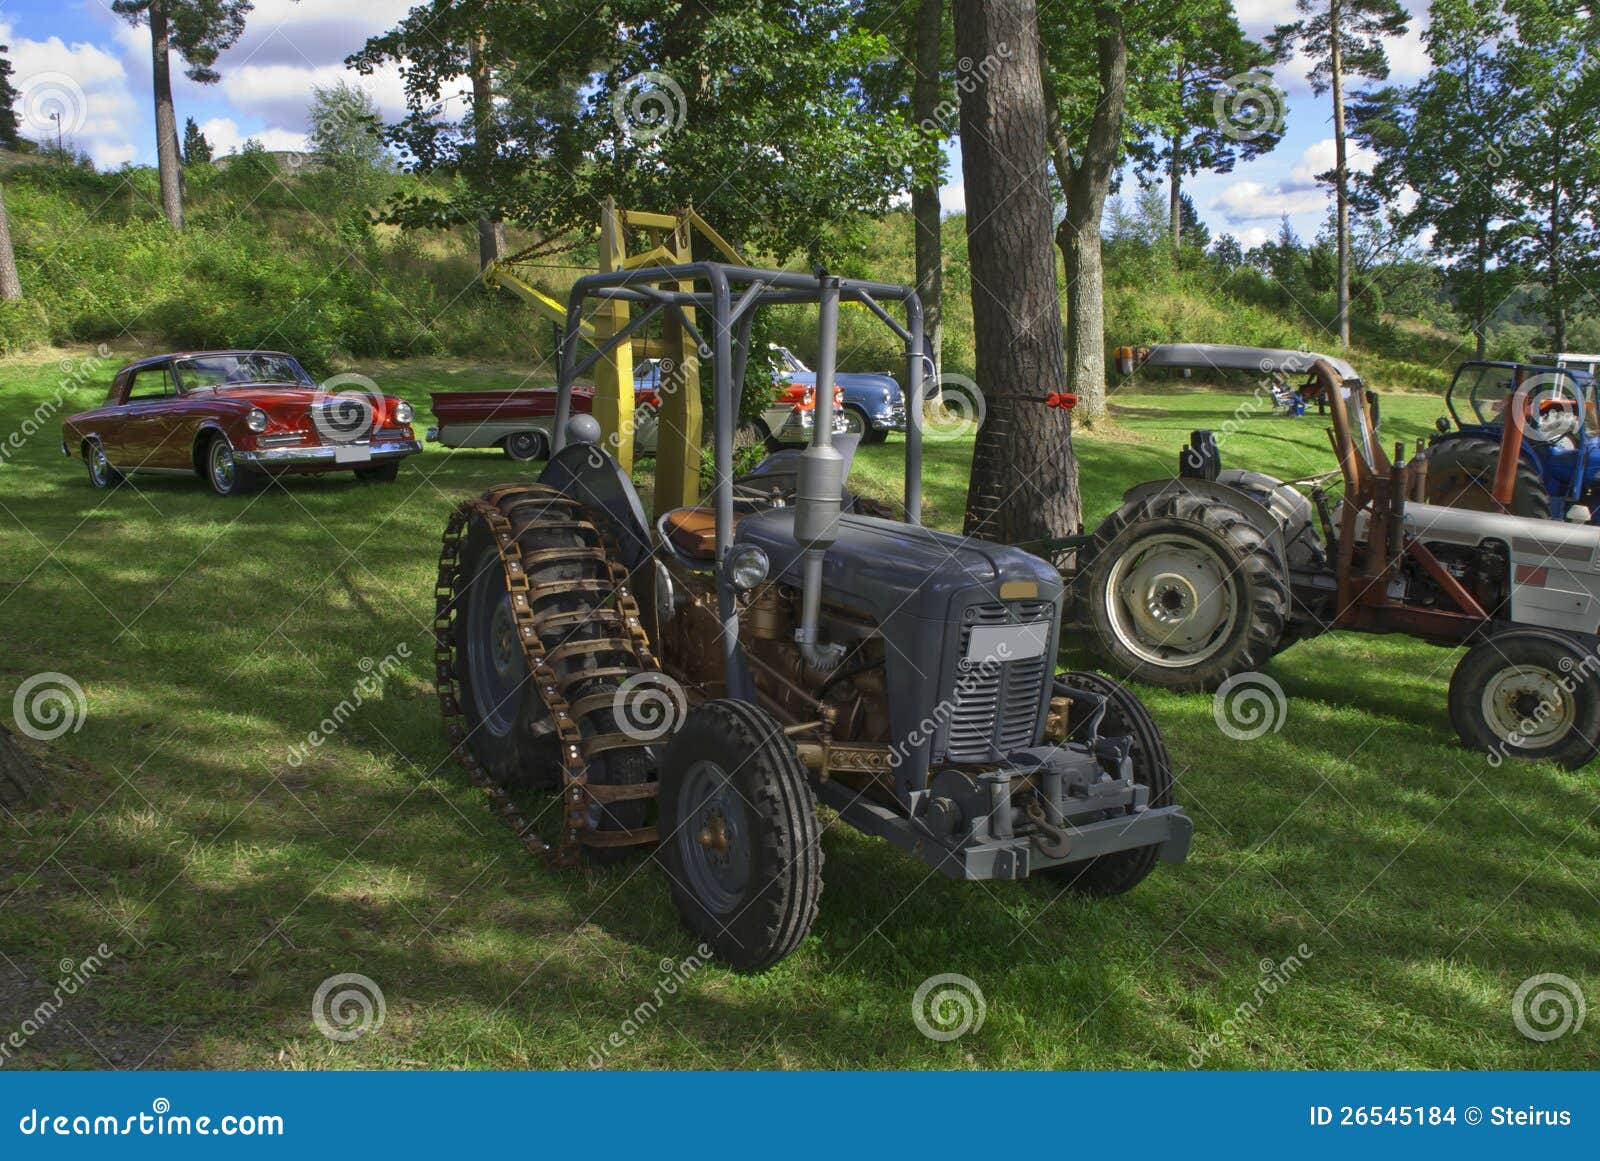 old tractor (ferguson)